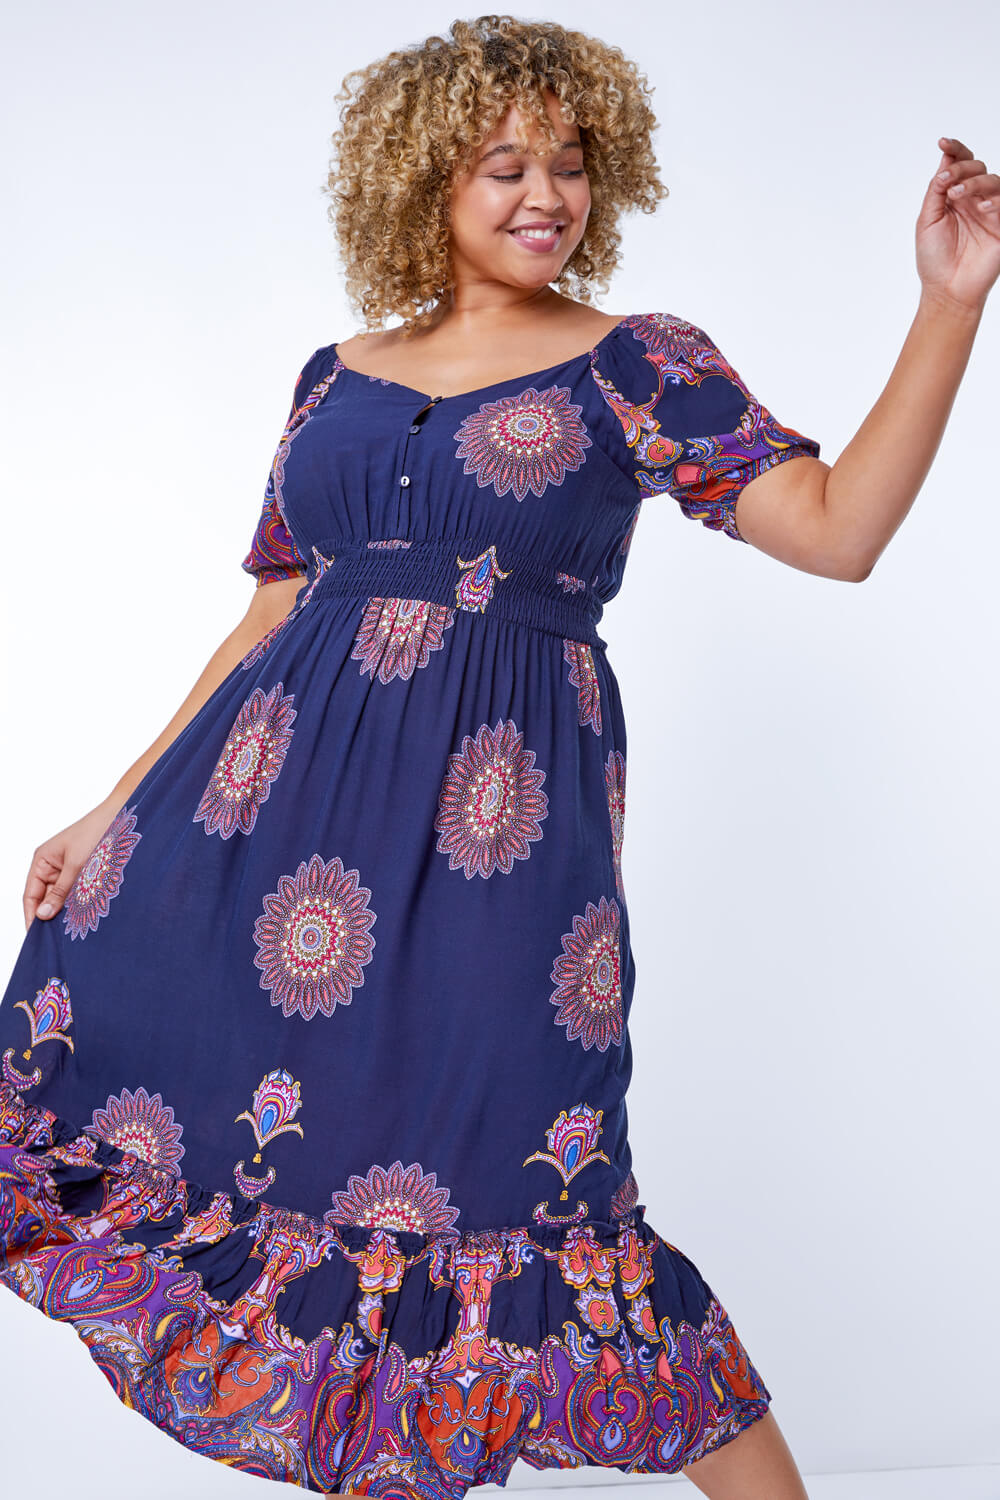 Tracey Sequin Dress  Plus size cocktail dresses, Plus size evening gown,  Plus size outfits